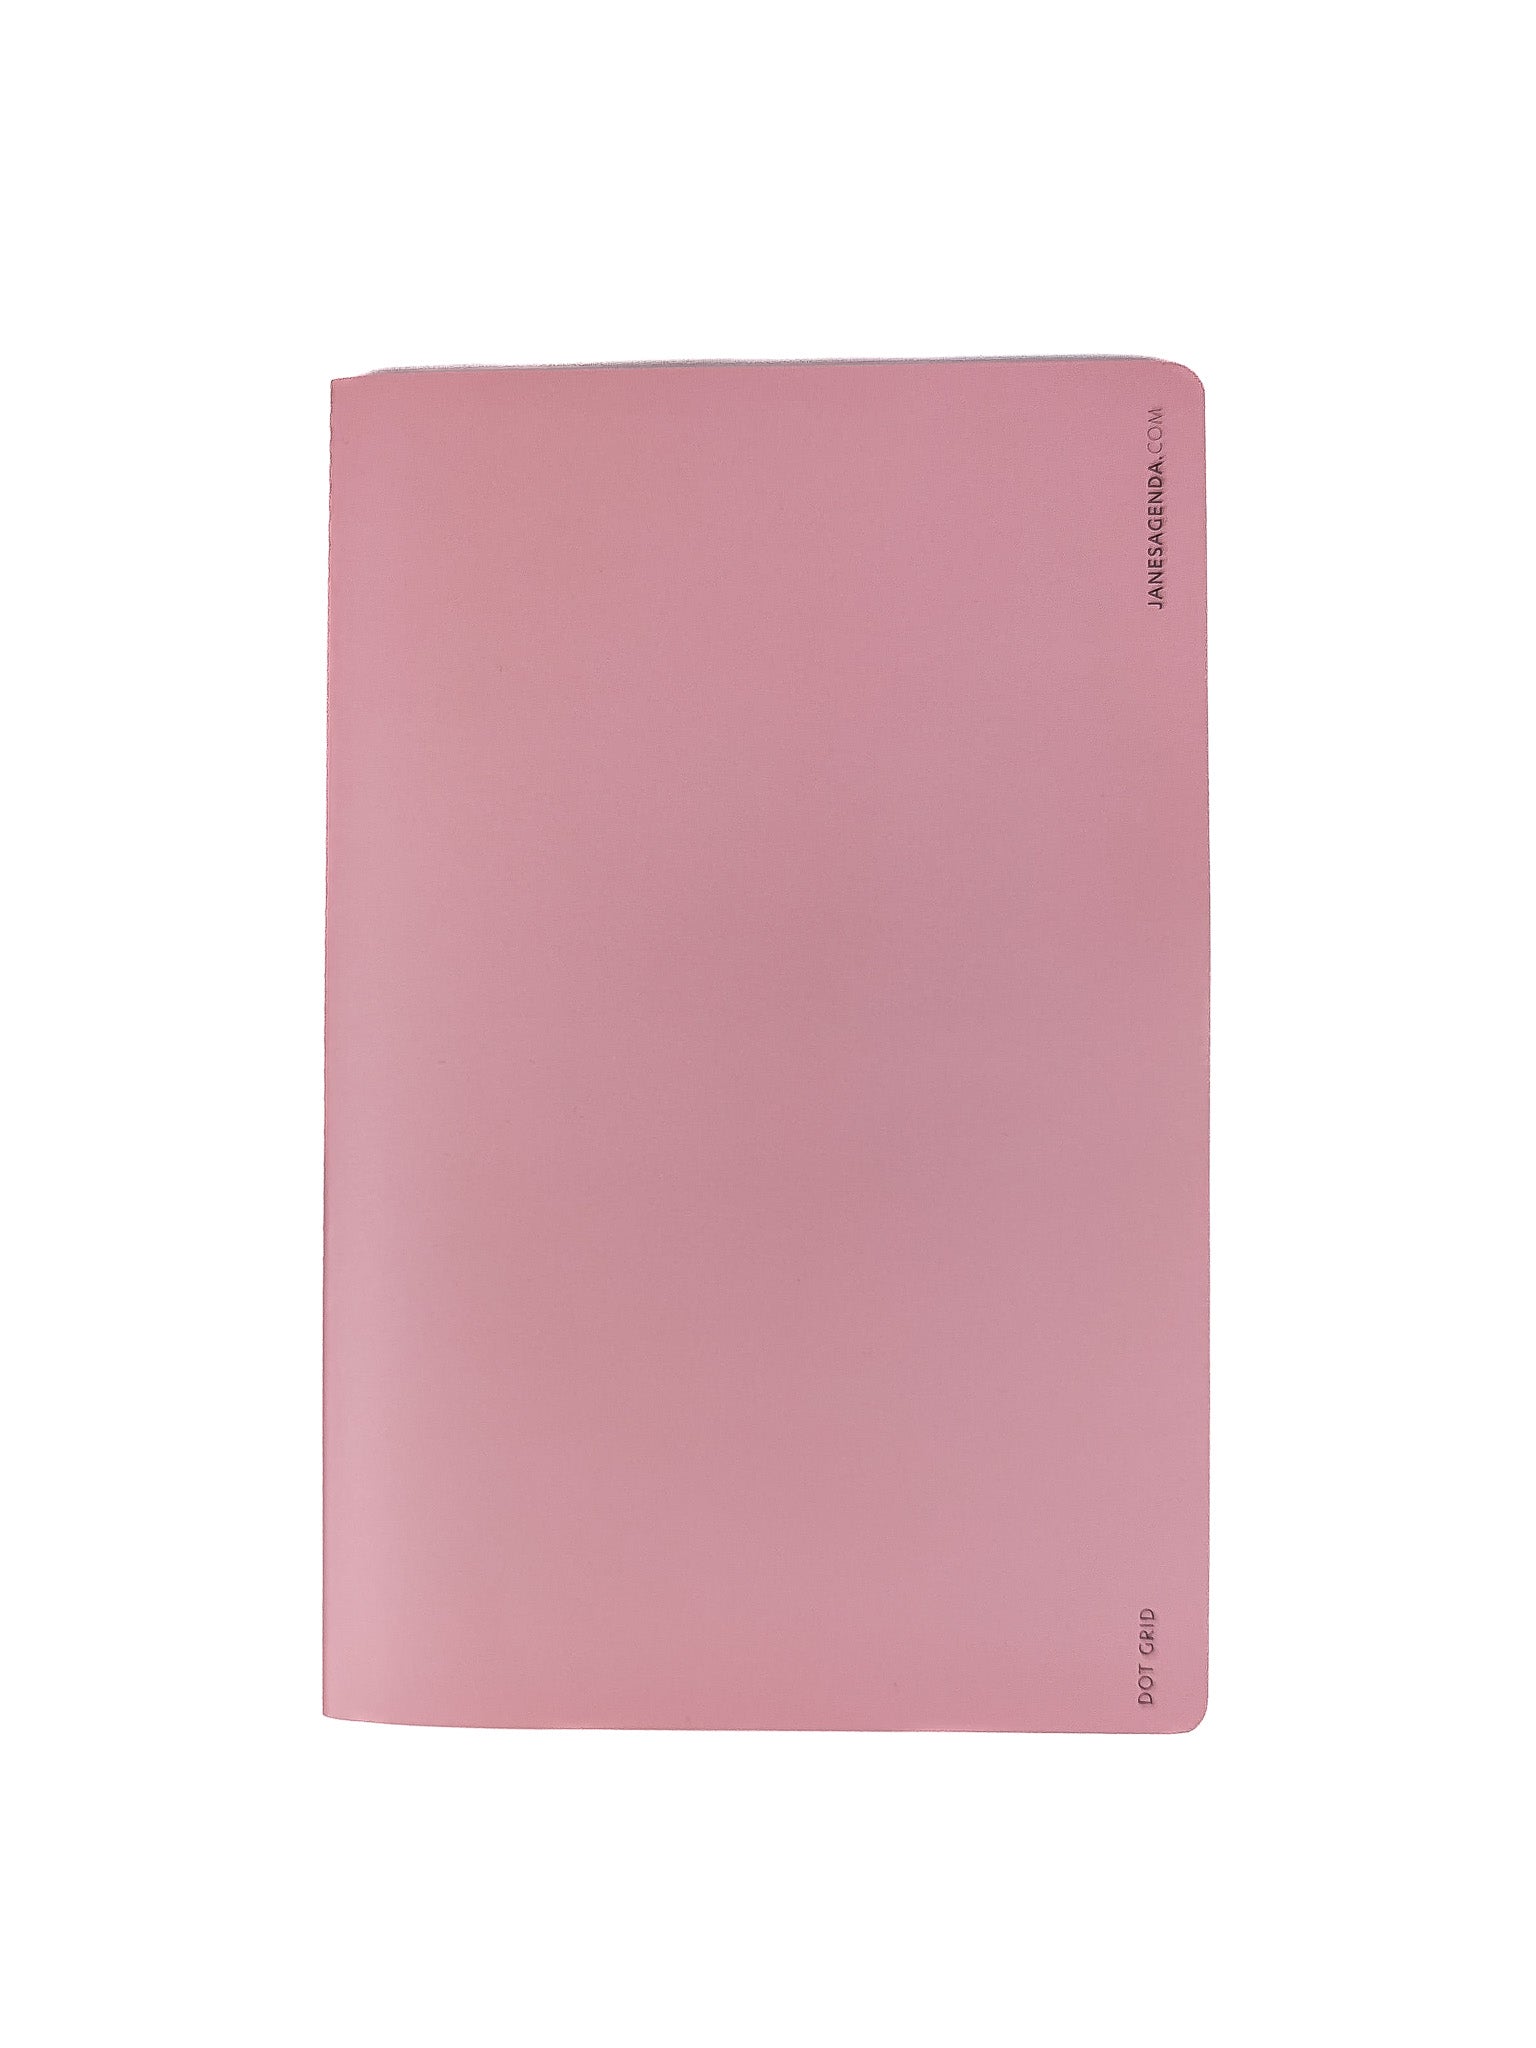 Dot grid journal saddle stitch notebook in blush pink by Jane's Agenda.